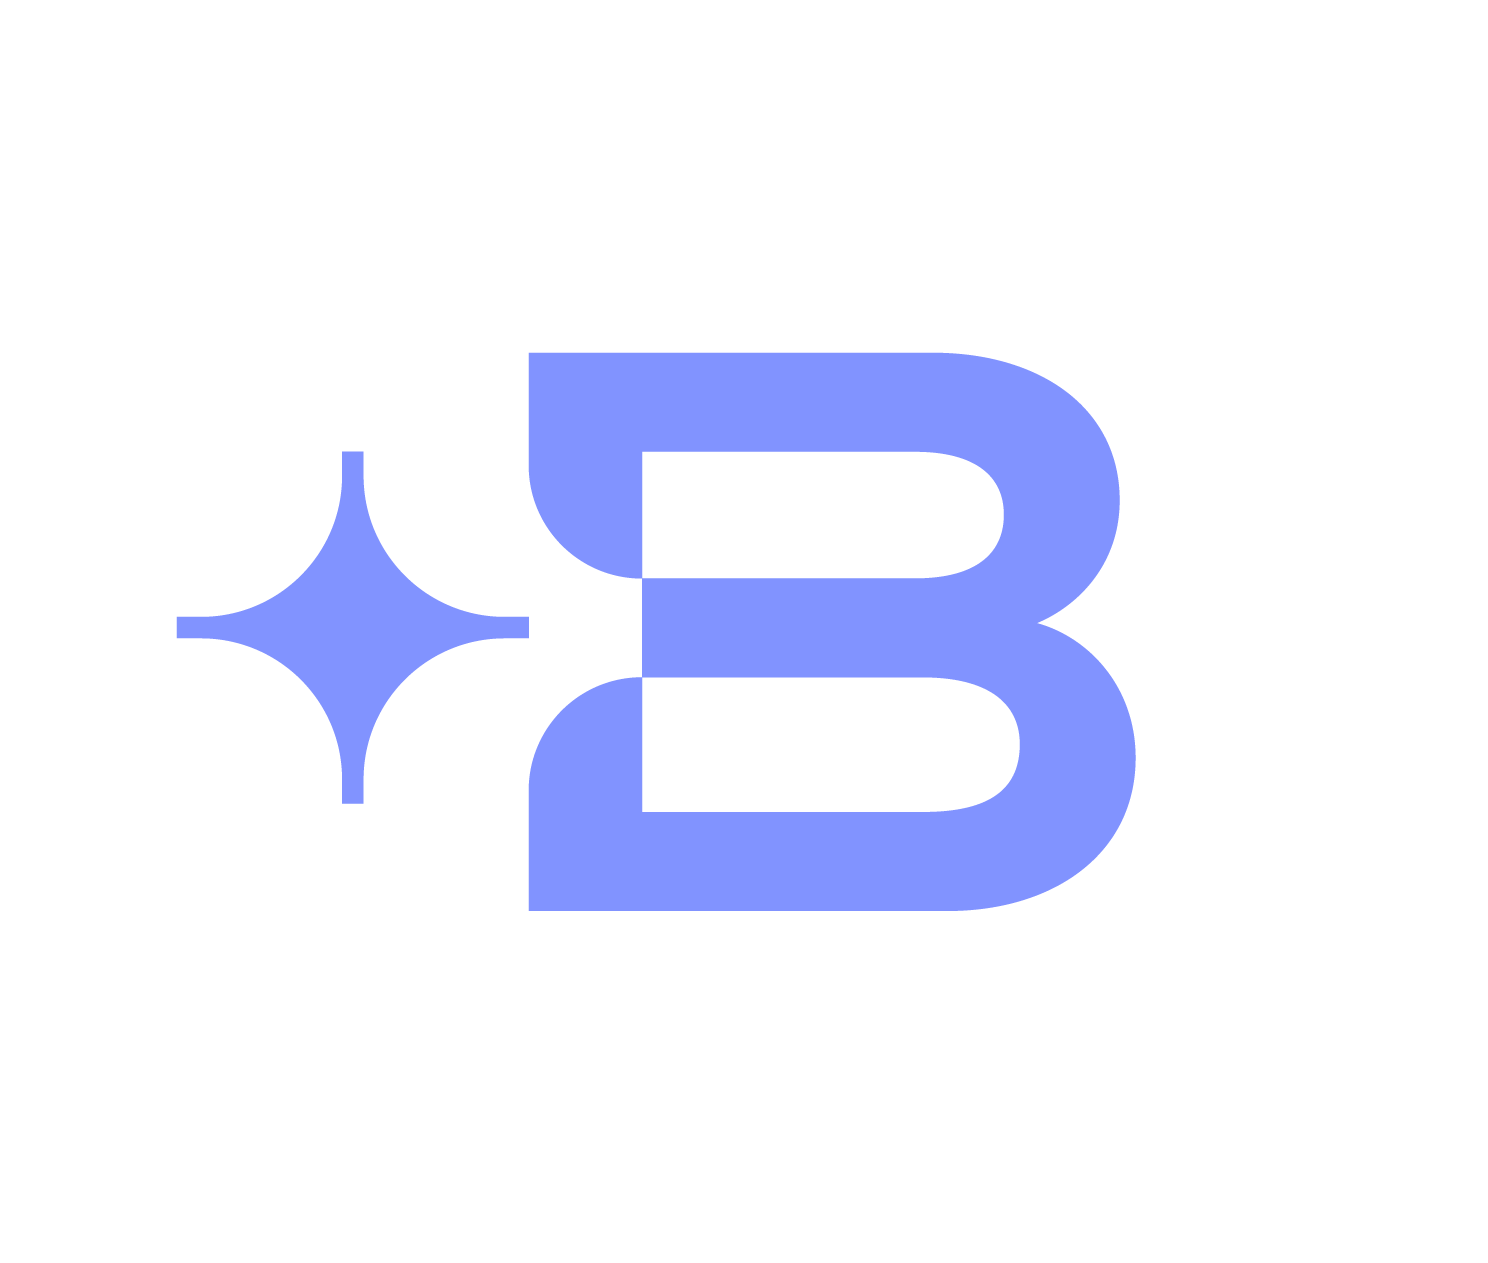 Builders logo